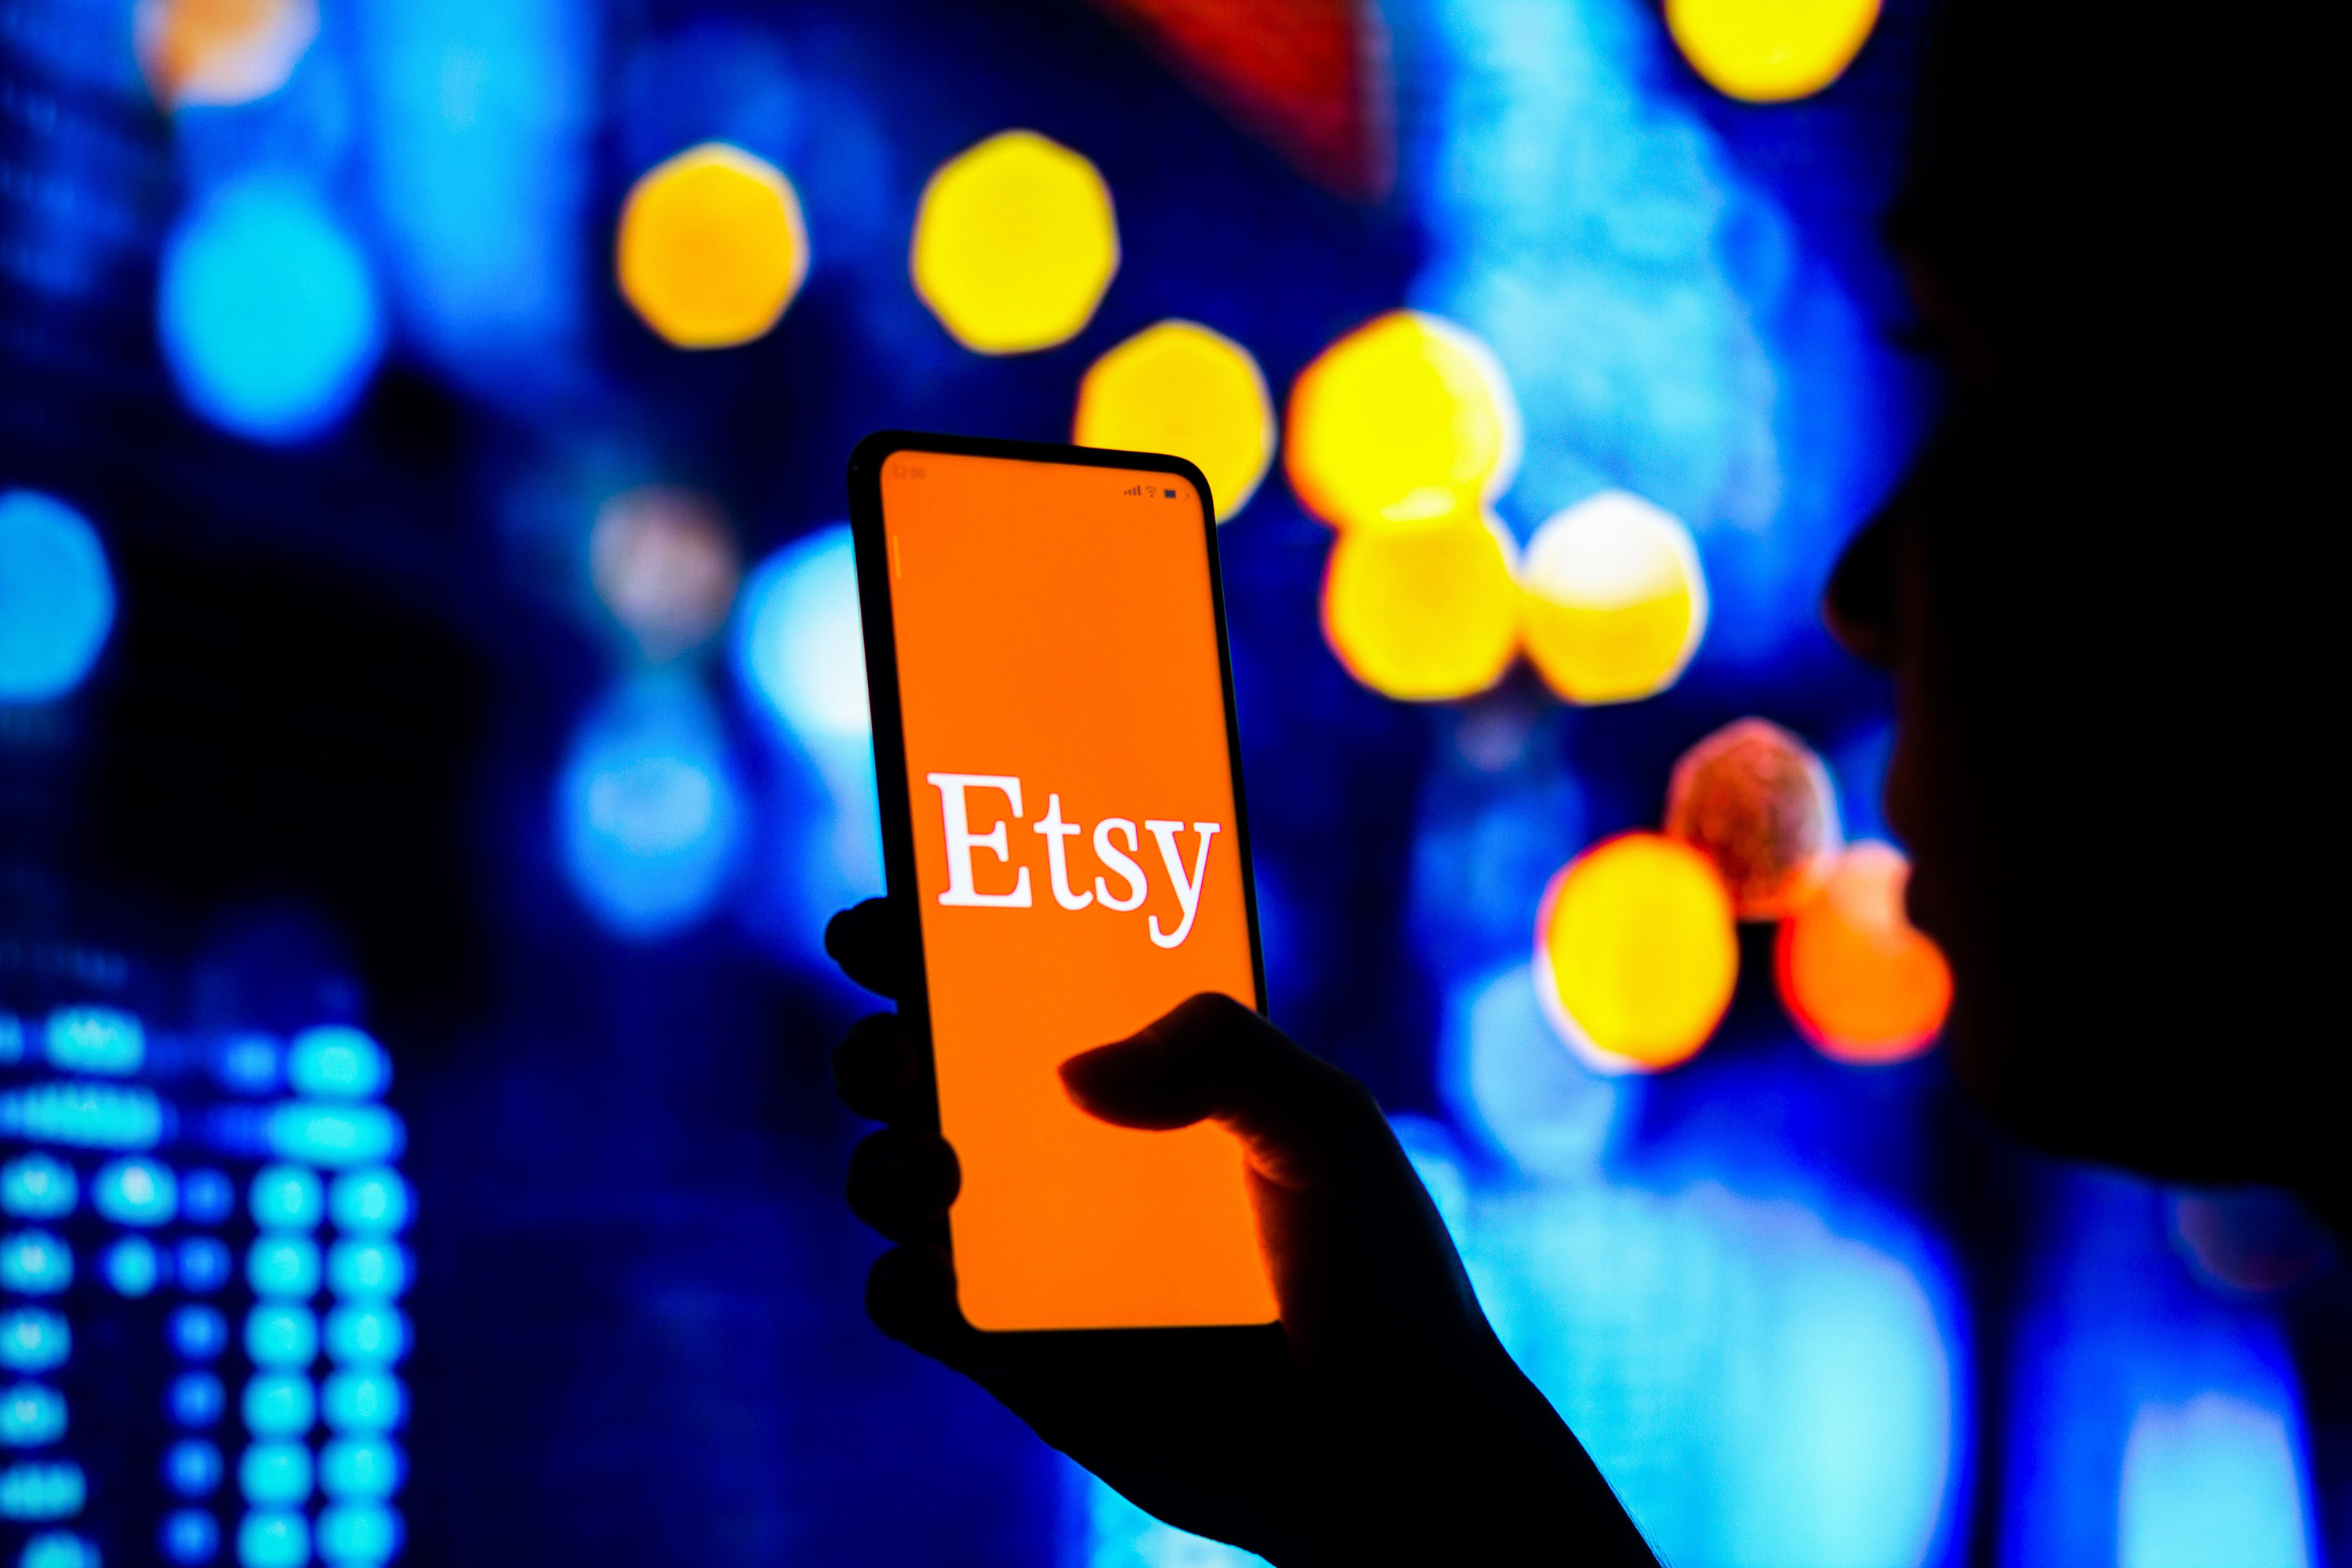 The Etsy logo on someones phone